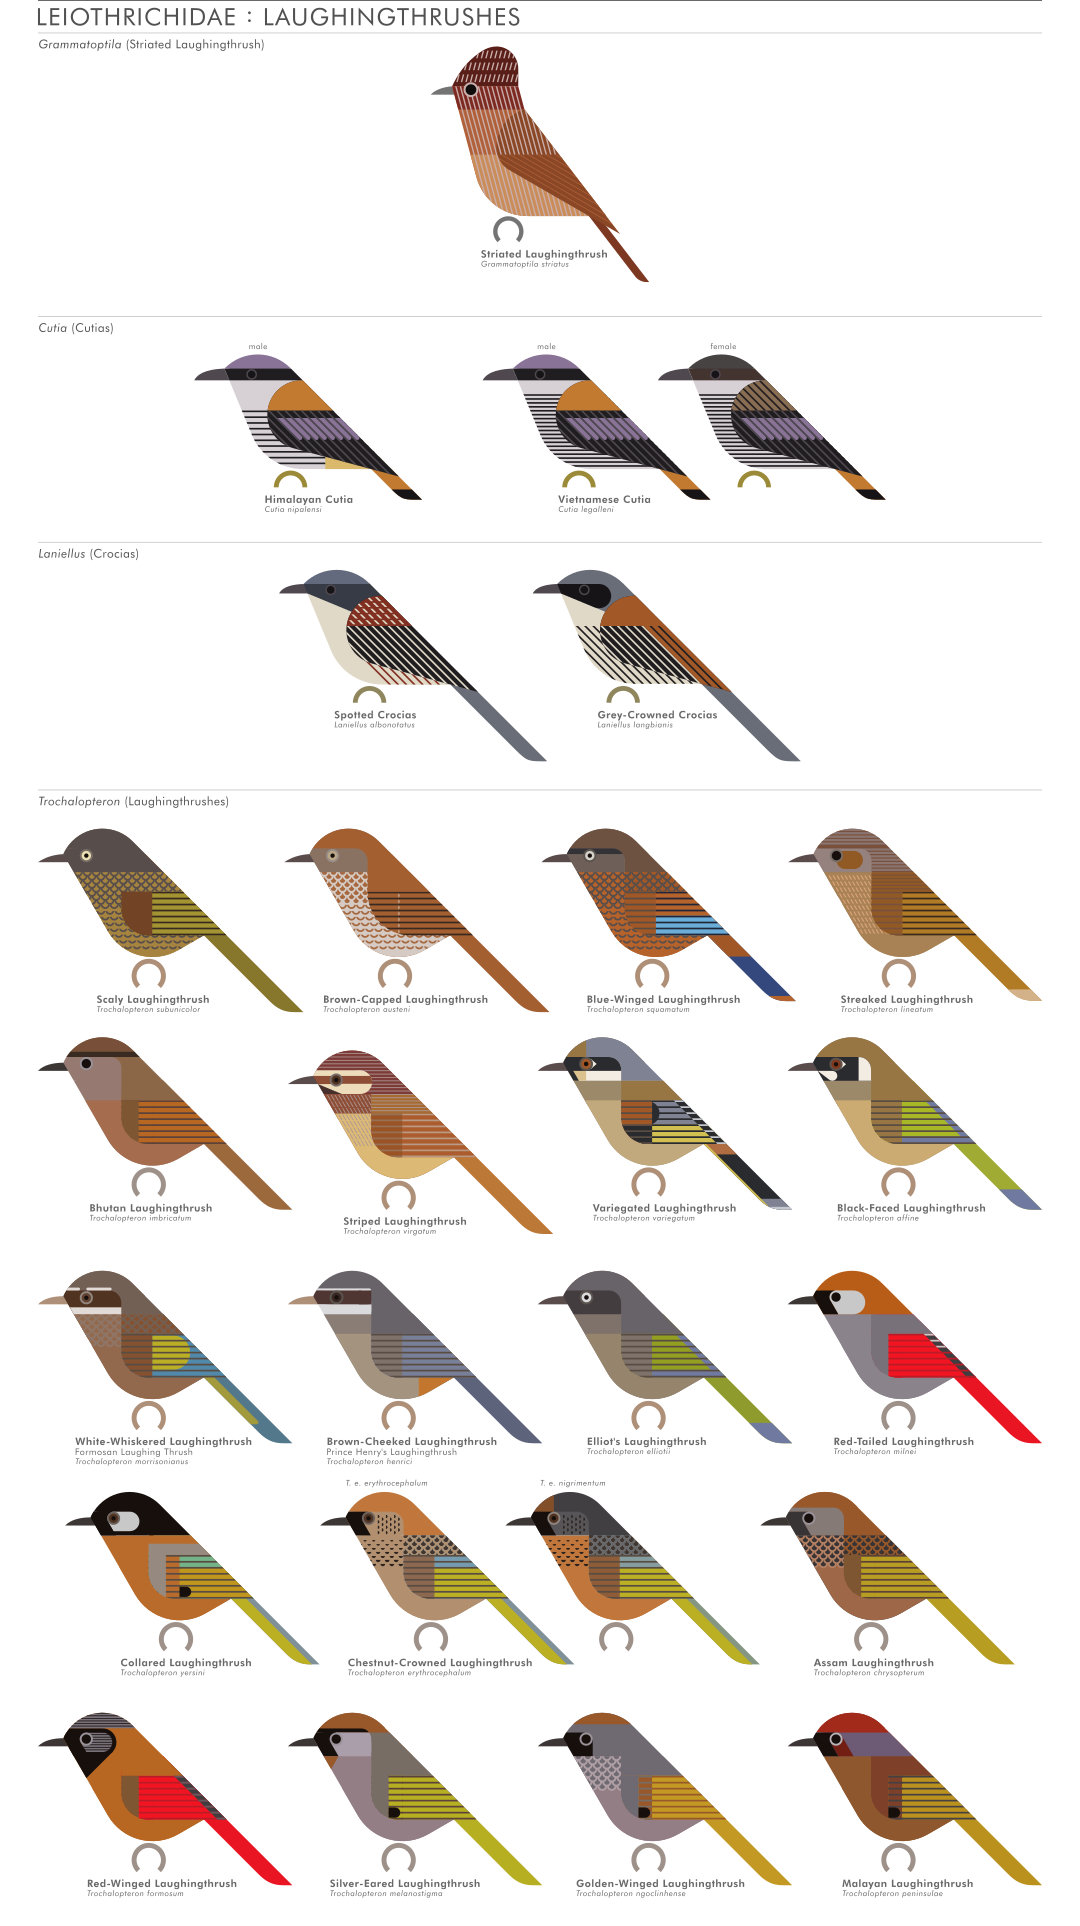 scott partridge - AVE - avian vector encyclopedia - laughingthrushes - bird vector art